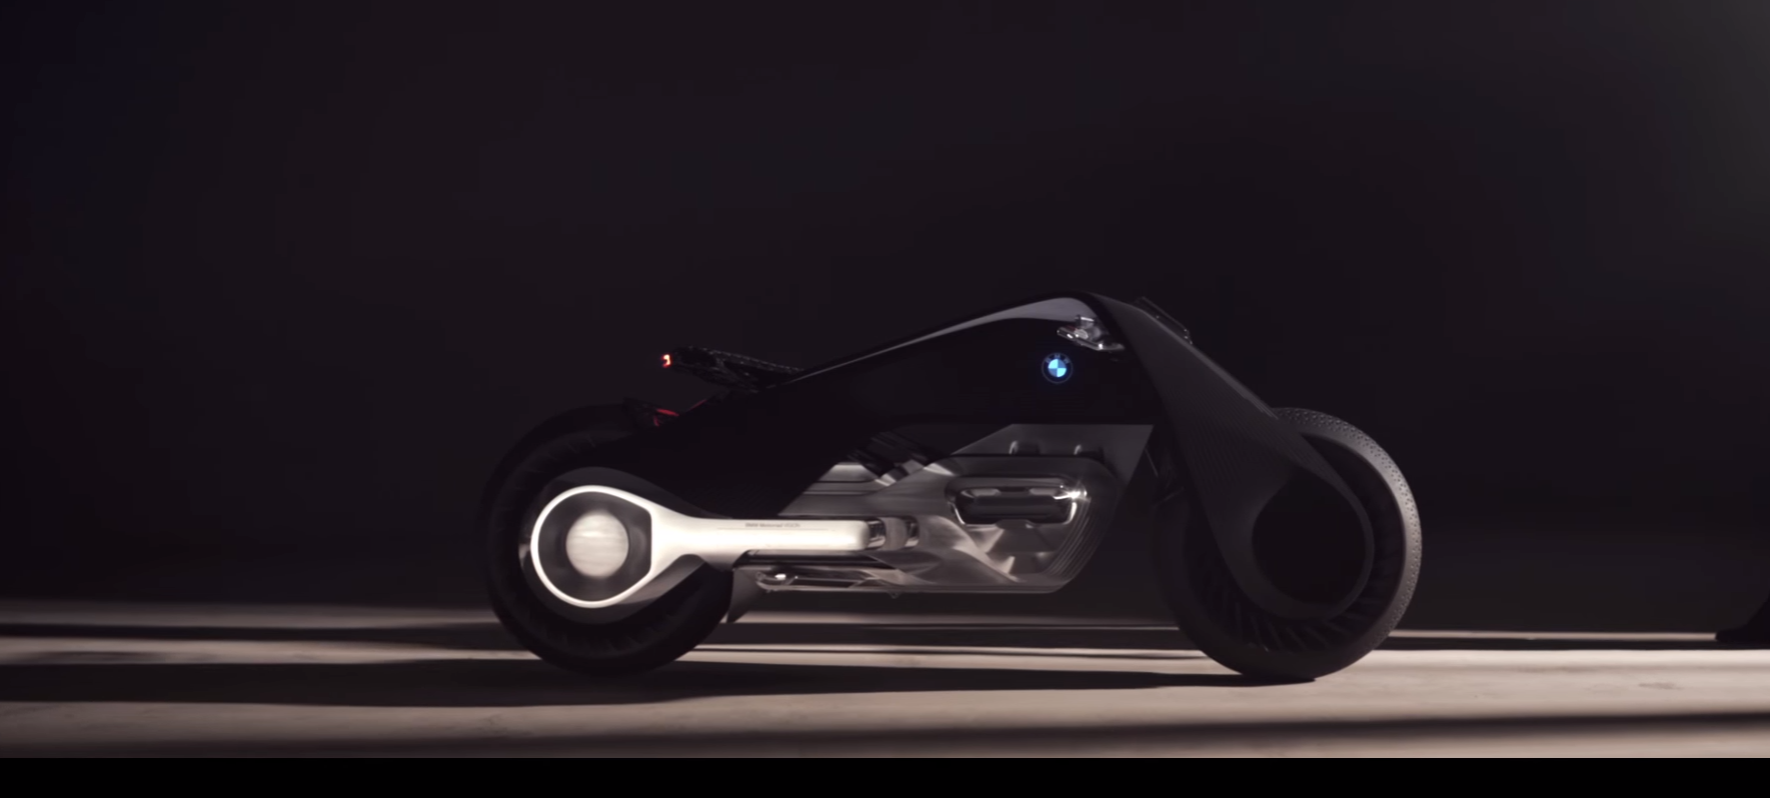 La Motorrad Vision Next 100 ne roulera pas avant 2030.